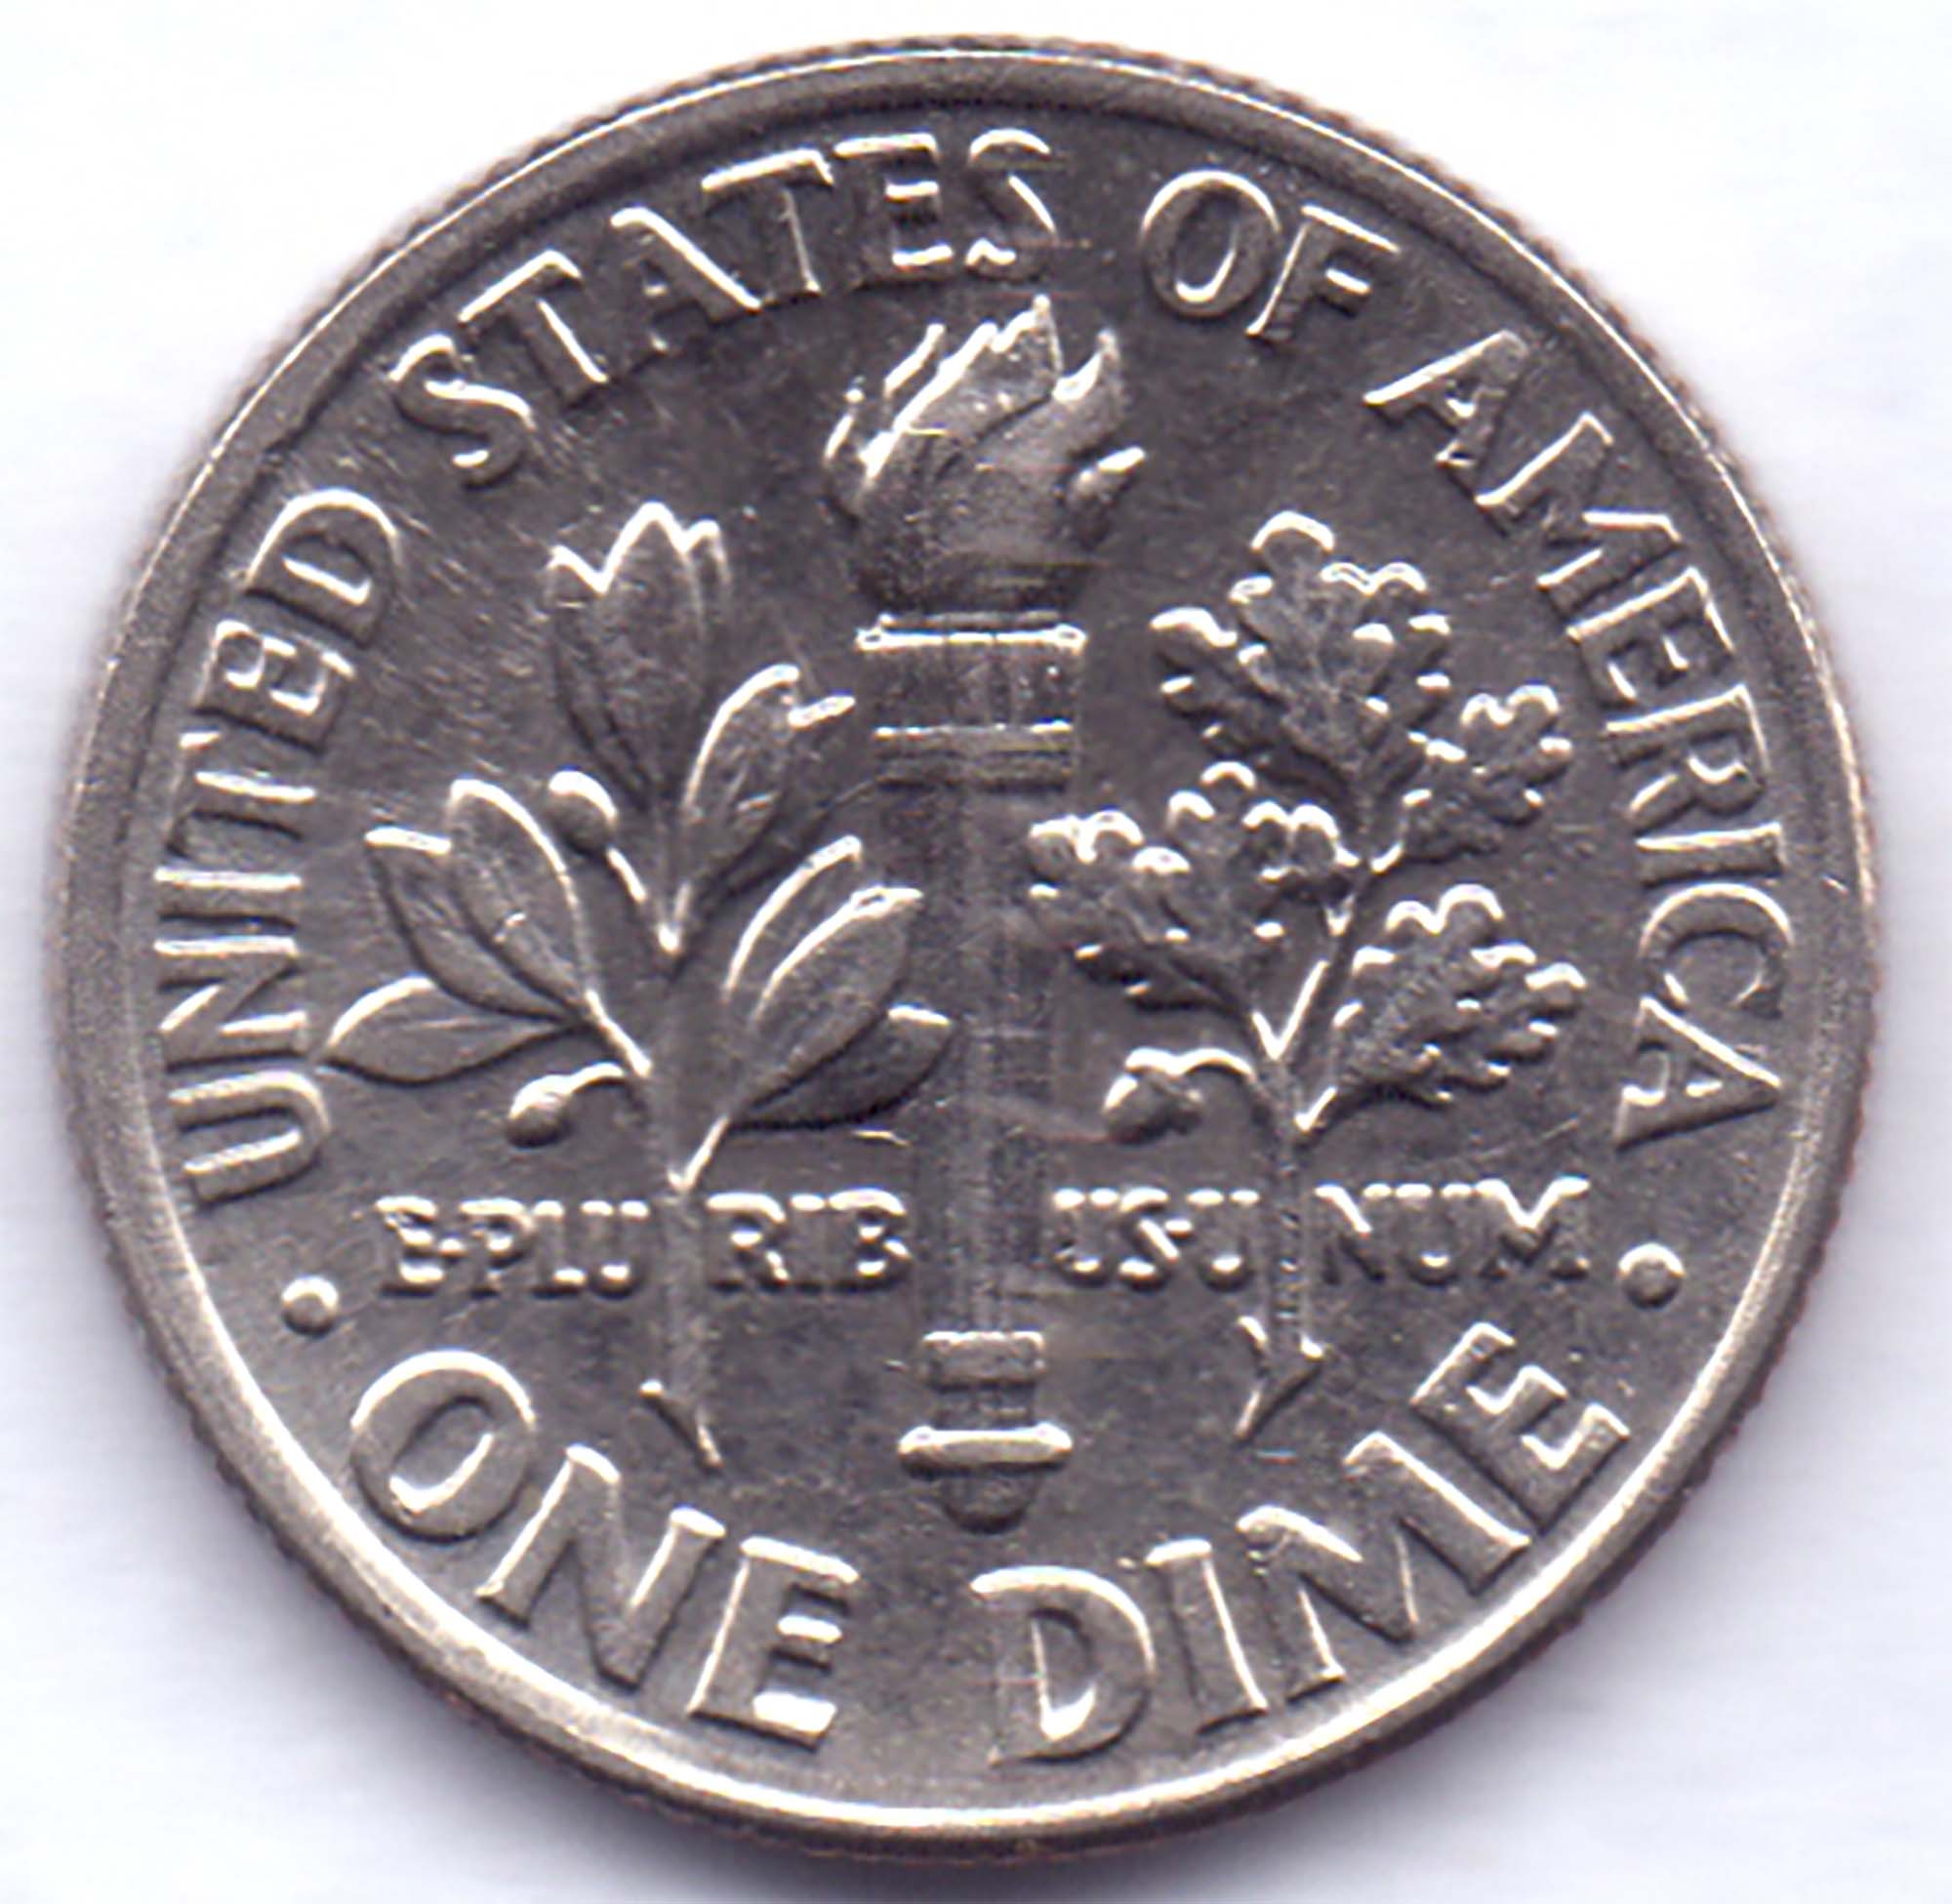 First coins. Монета one Dime Liberty 1996. One Dime монета 1996. Монета one Dime Liberty. 1 Дайм США 1994.